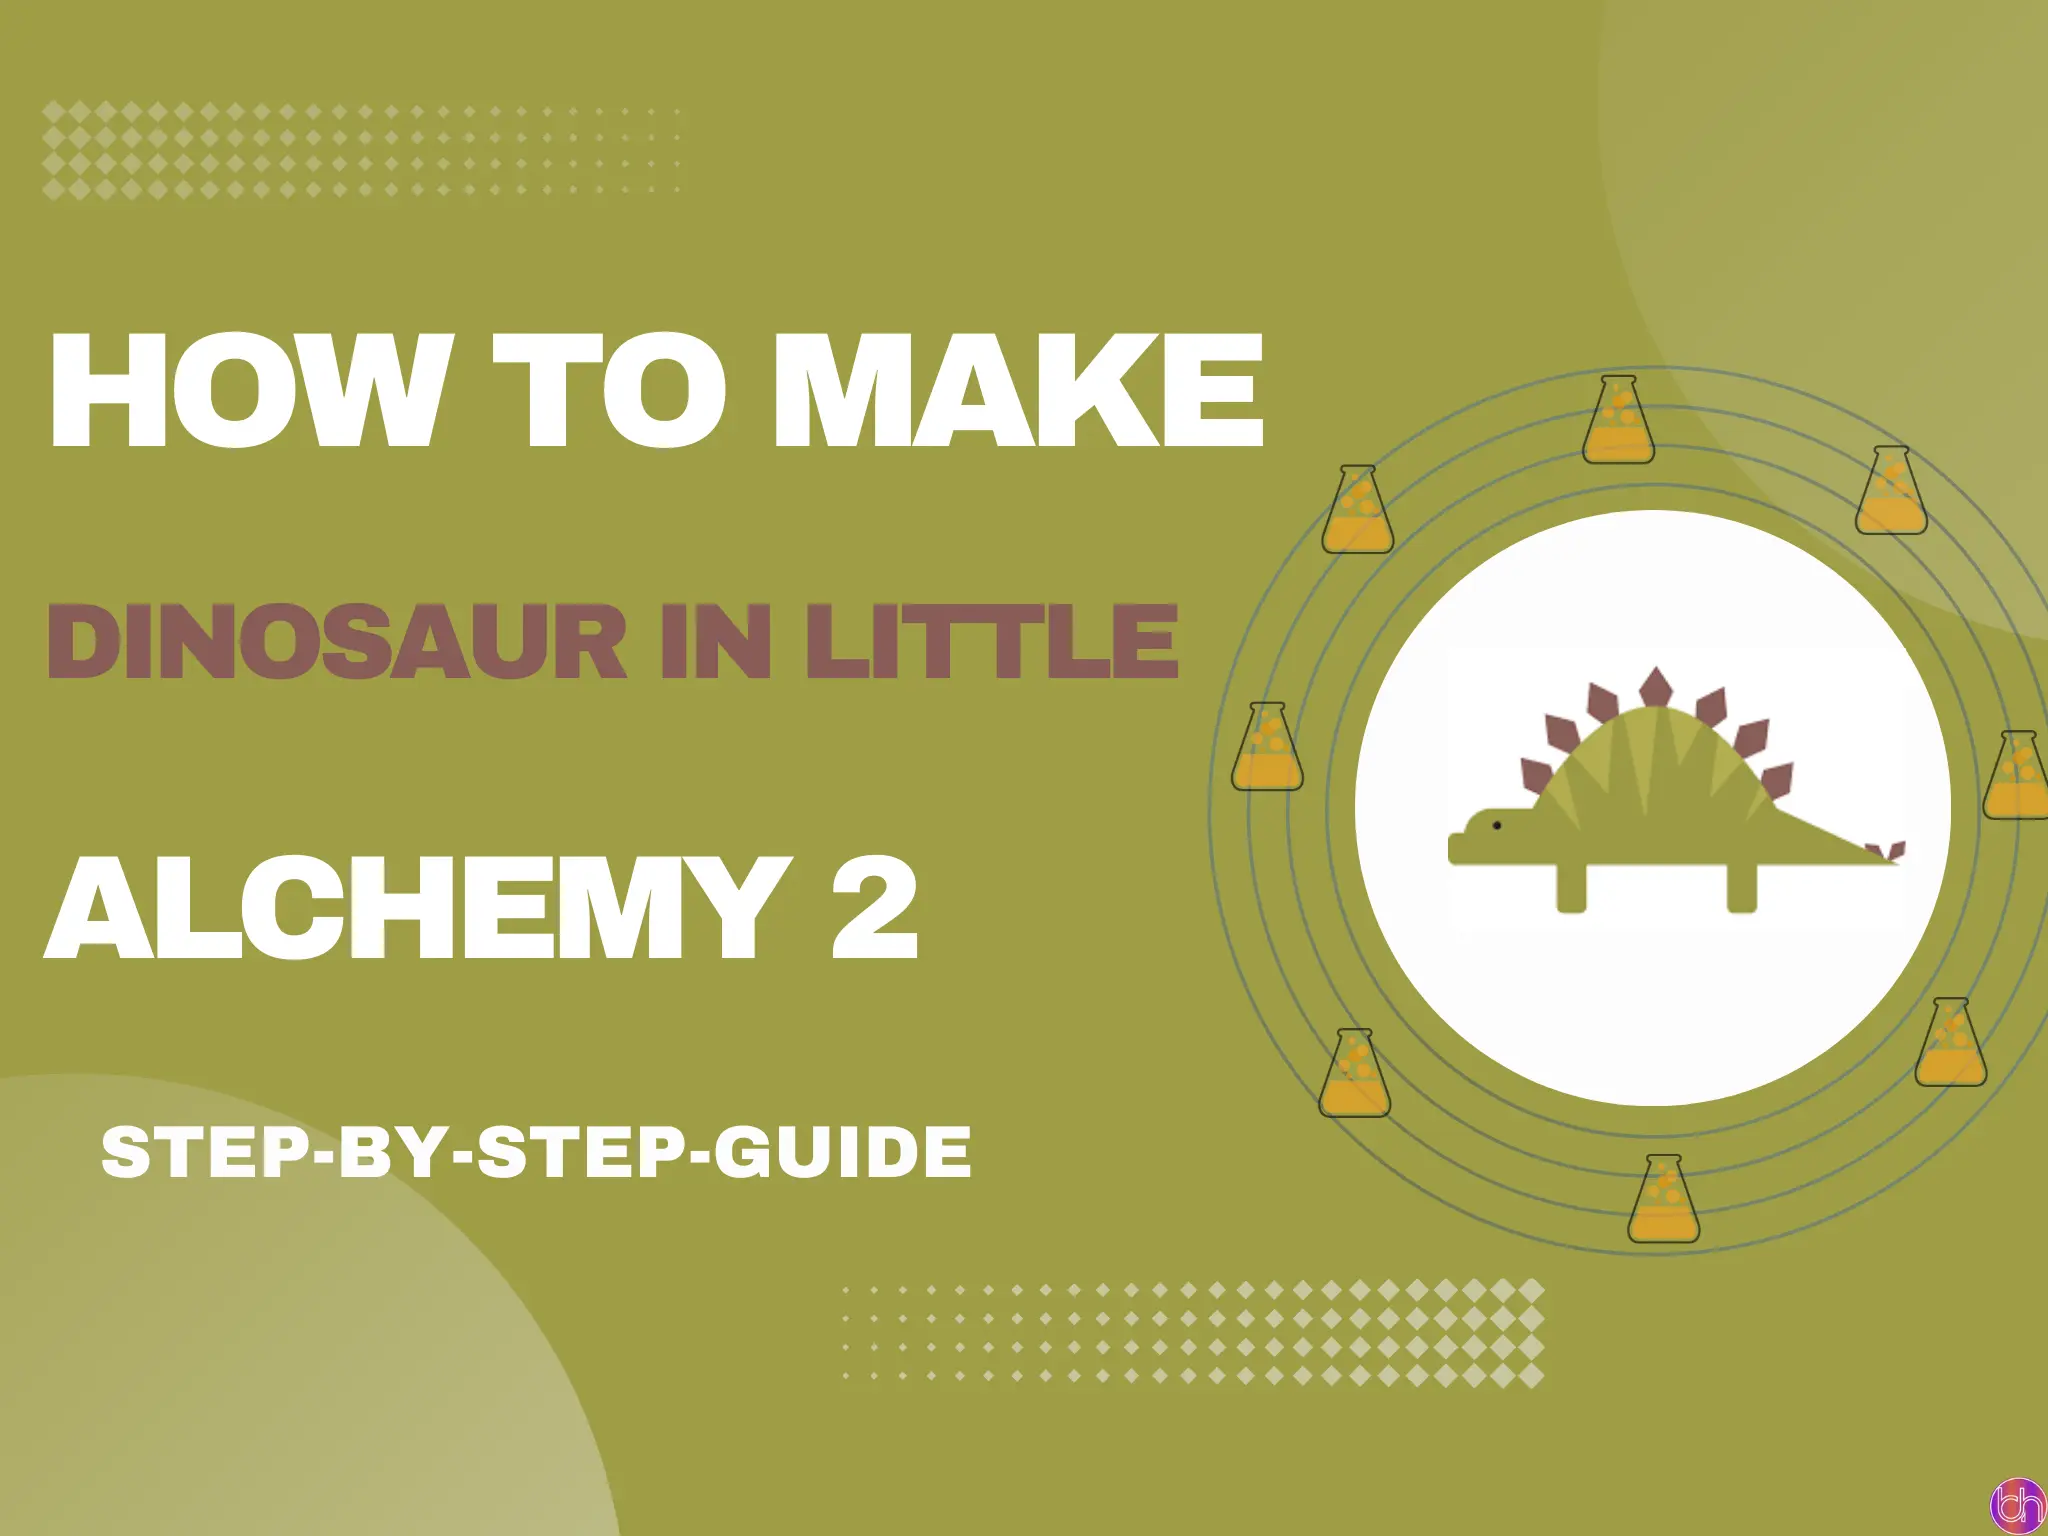 How to make Dinosaur in little alchemy 2